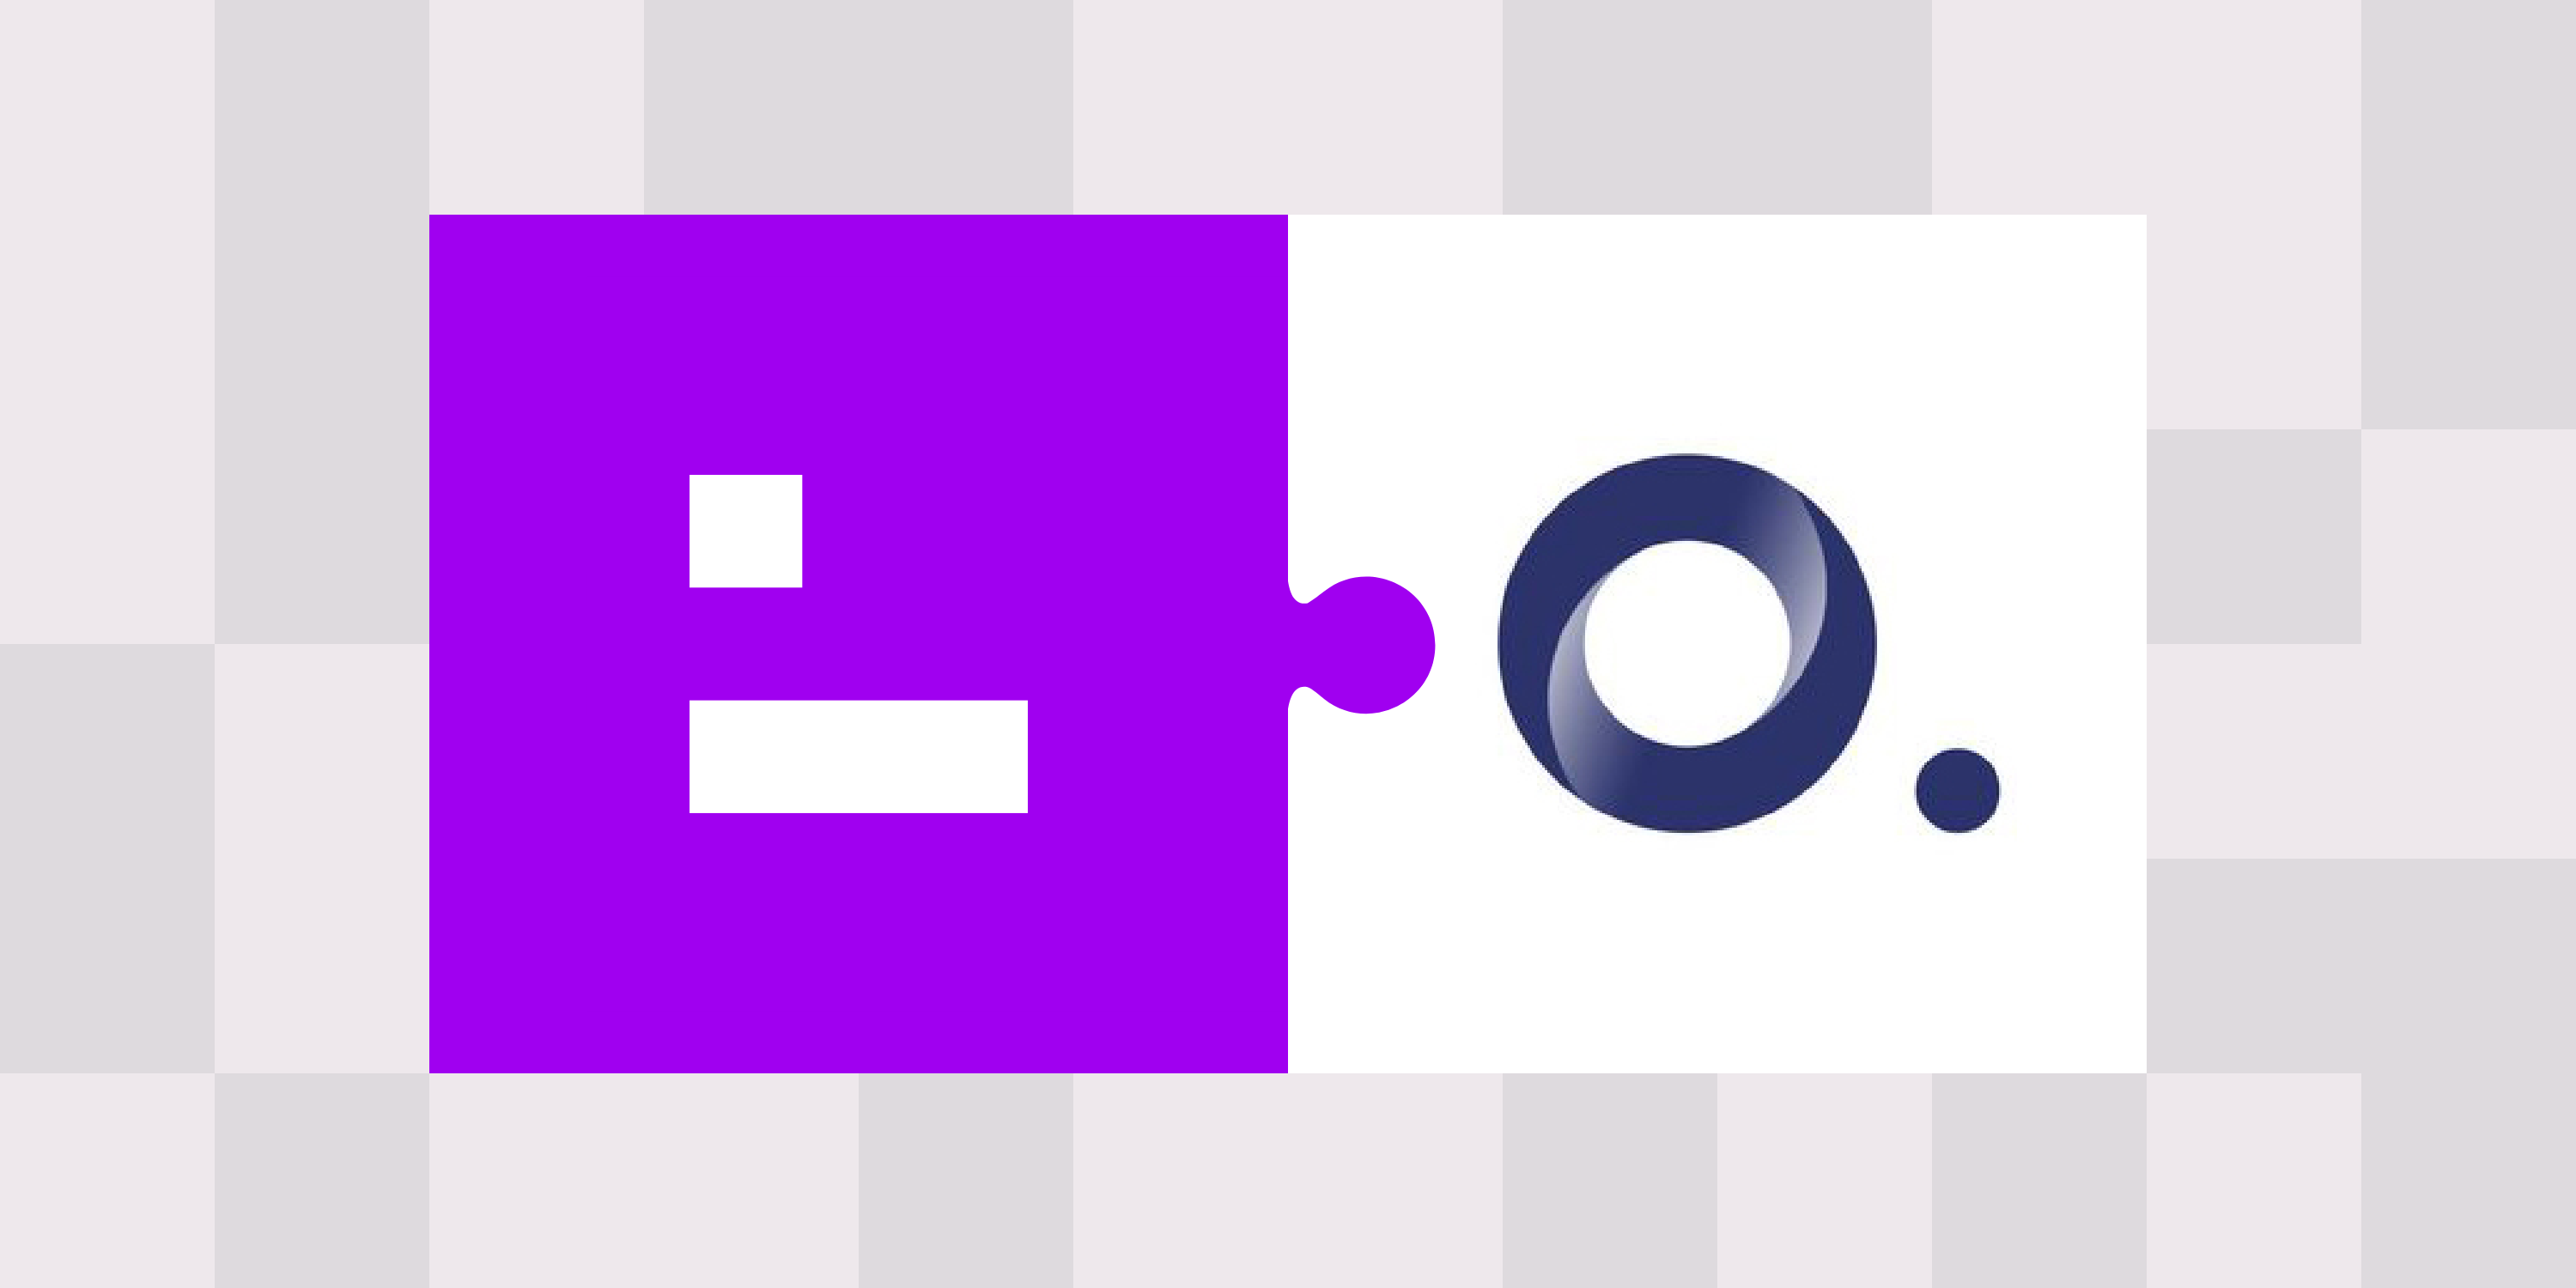 BOS and Ardoq logos together